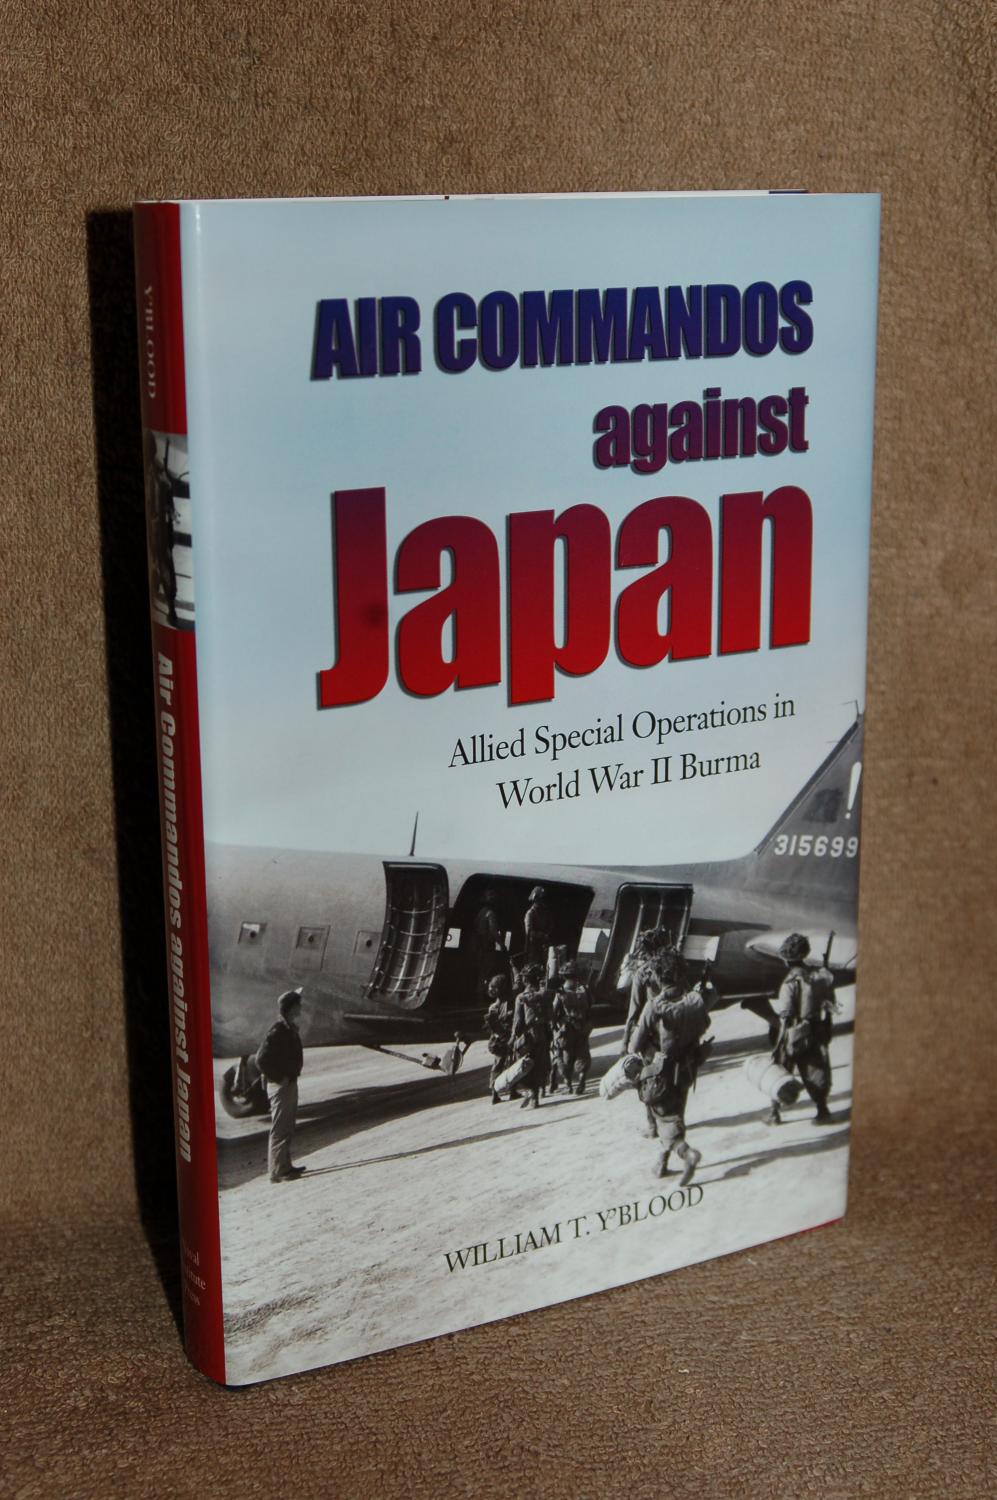 AIR COMMANDOS AGAINST JAPAN; ALLIED SPECIAL OPERATIONS IN WORLD WAR II BURMA - William T. Y'Blood